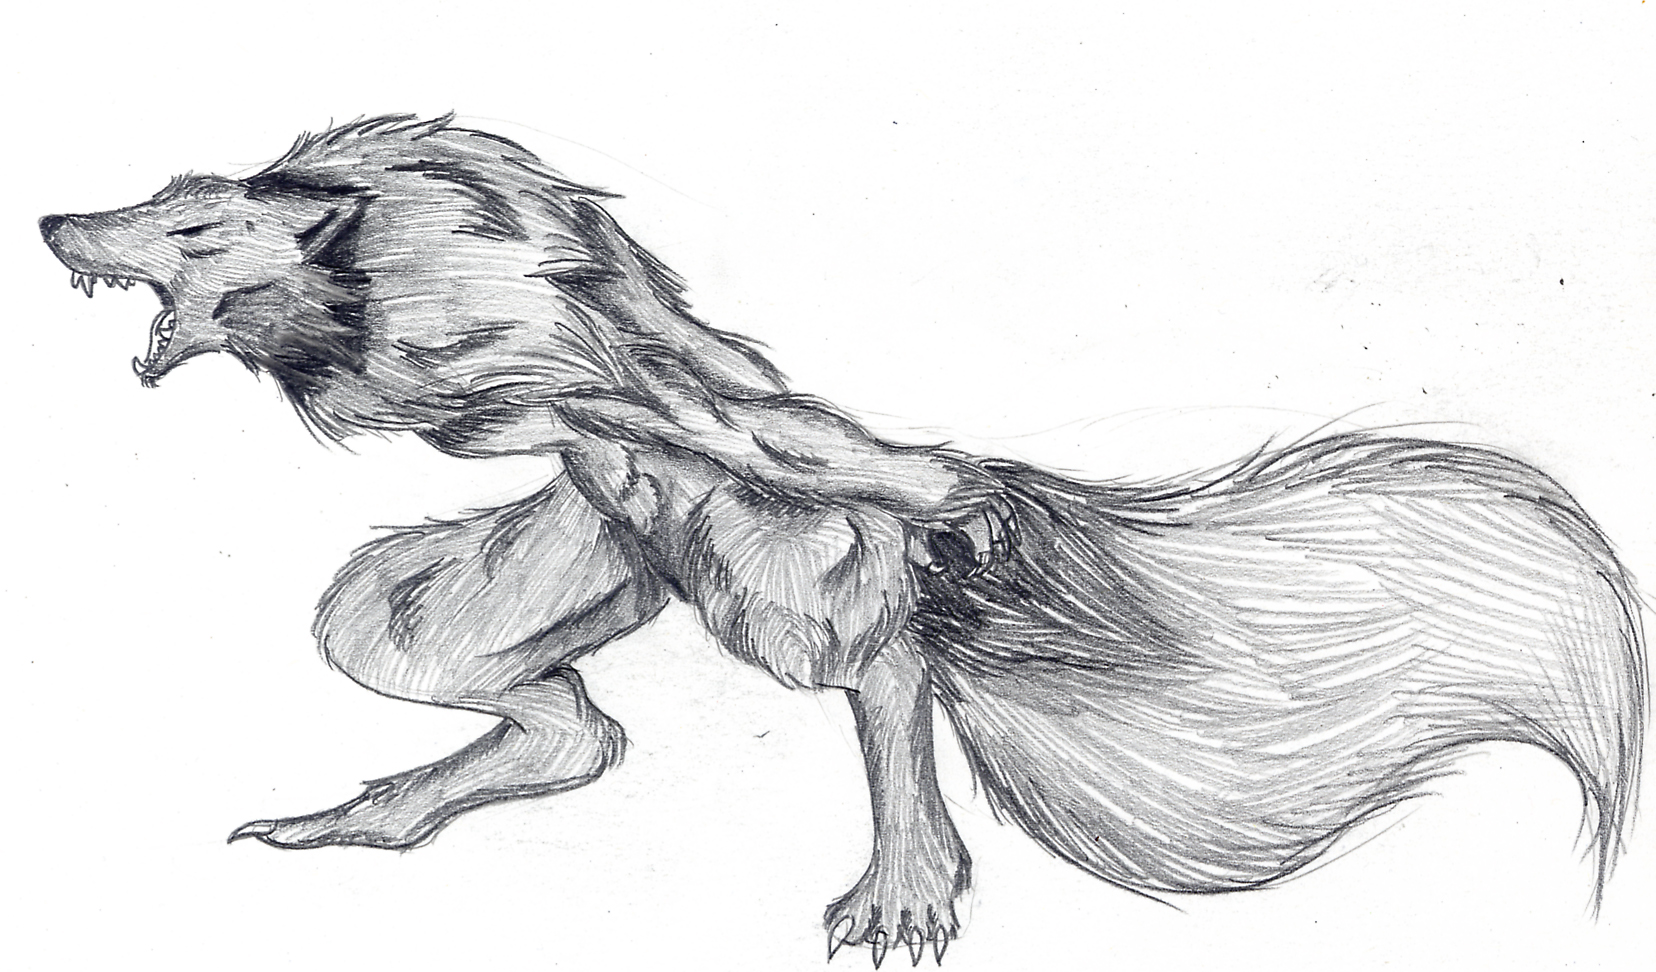 Werewolf by Chickibo